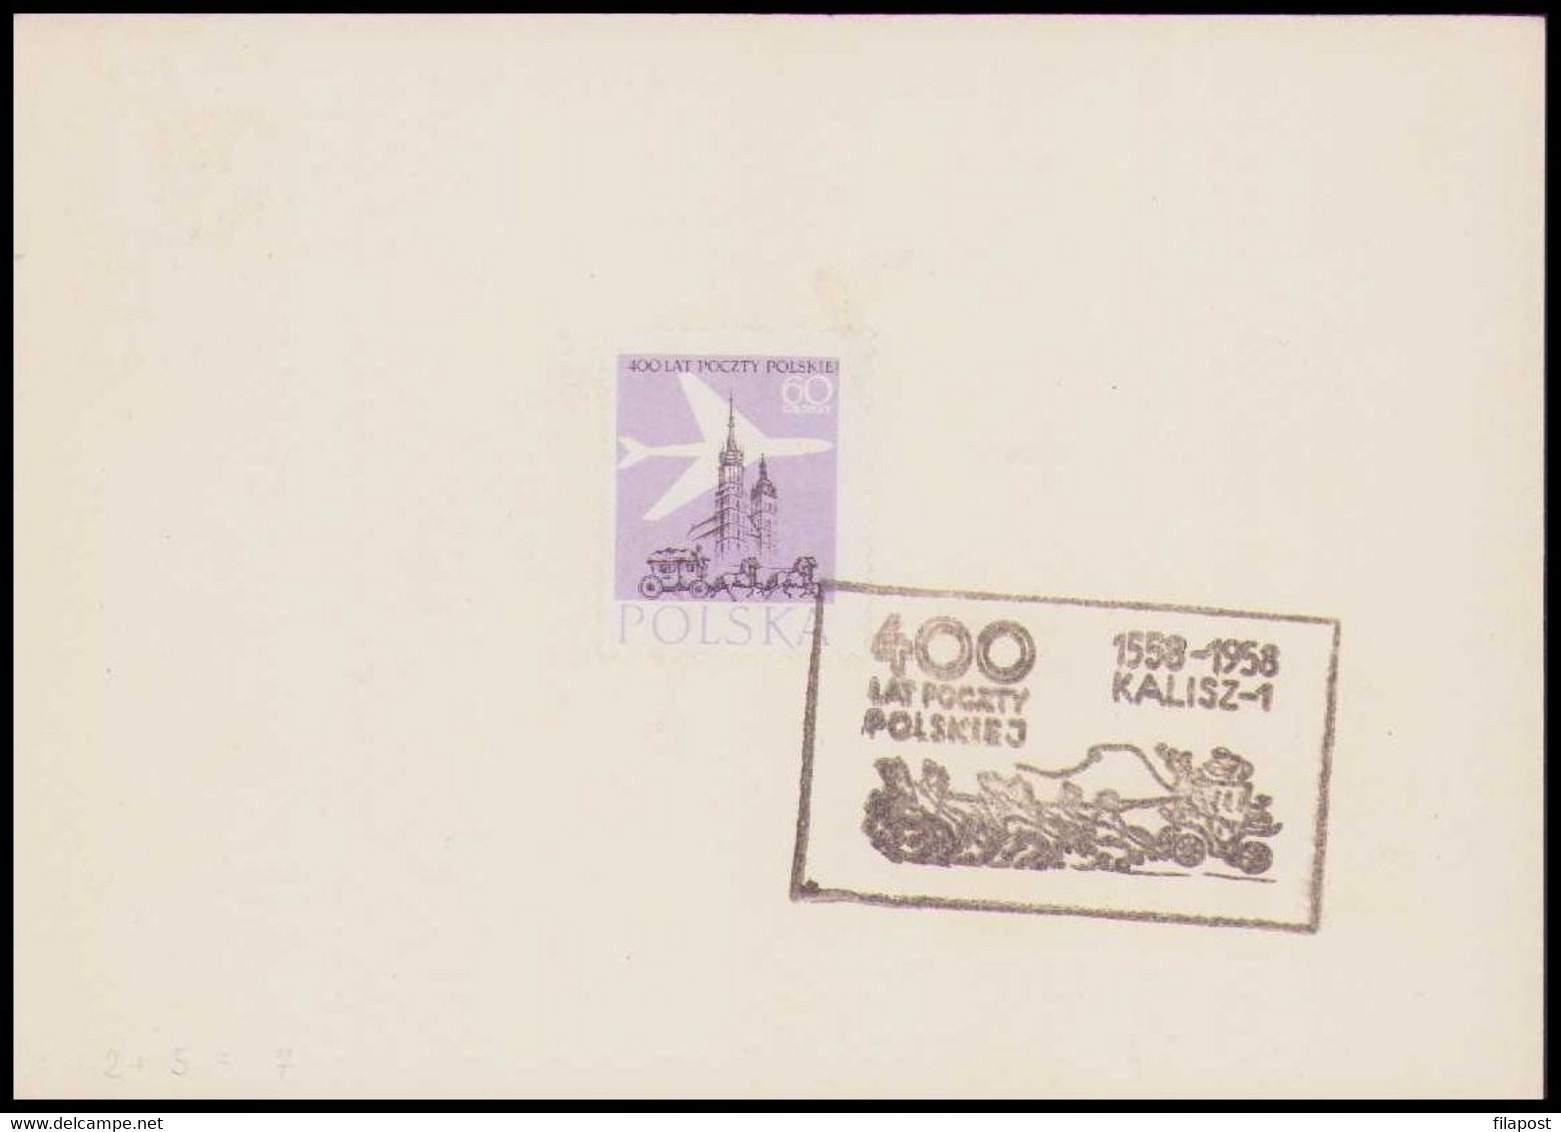 POLAND 1958 / 400 Years Of Polish Post, Skierniewice / Ostrow Kalisz 1 Postcard  P84 - Poste & Facteurs